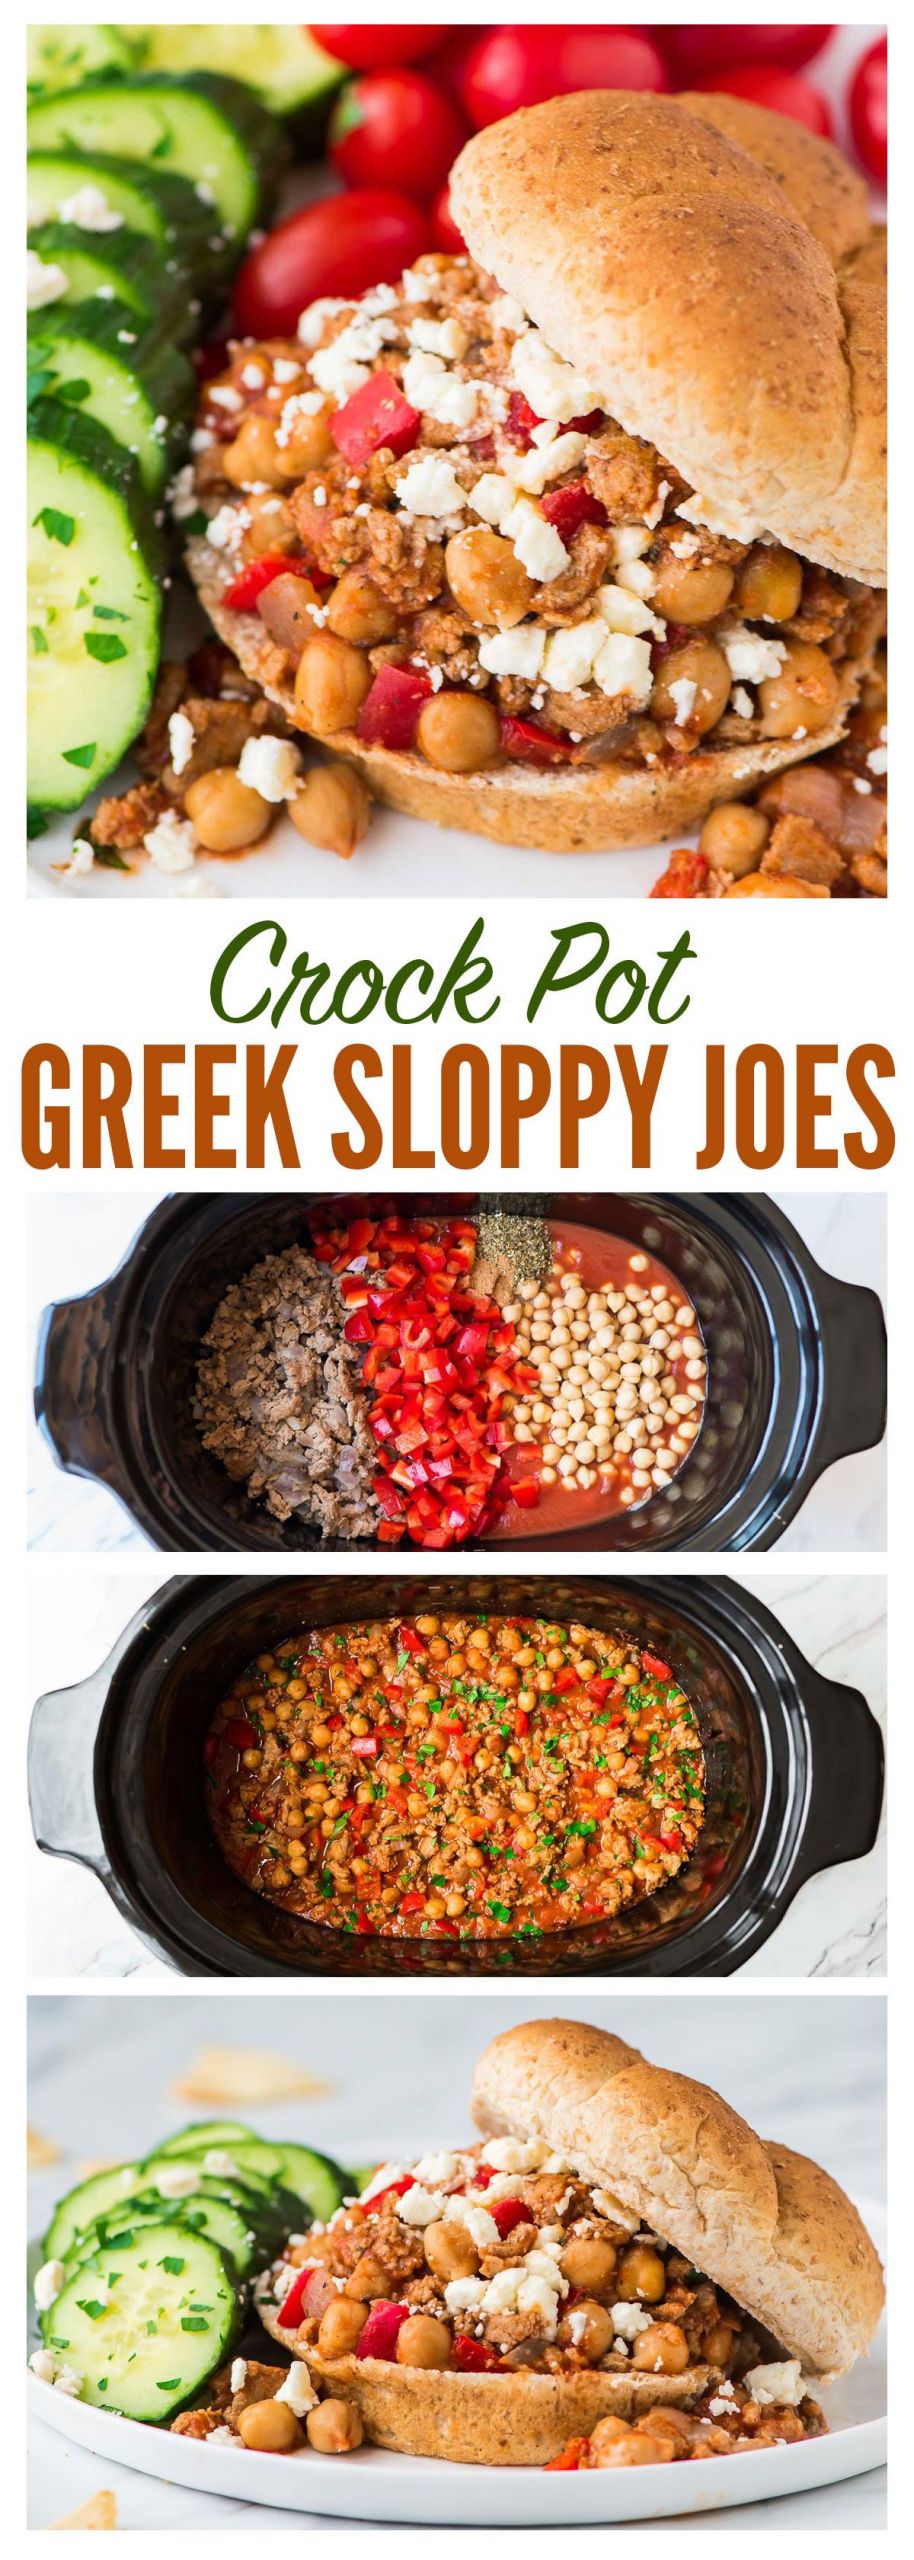 Healthy Ground Turkey Crock Pot Recipes
 Homemade Crock Pot Sloppy Joes with Ground Turkey